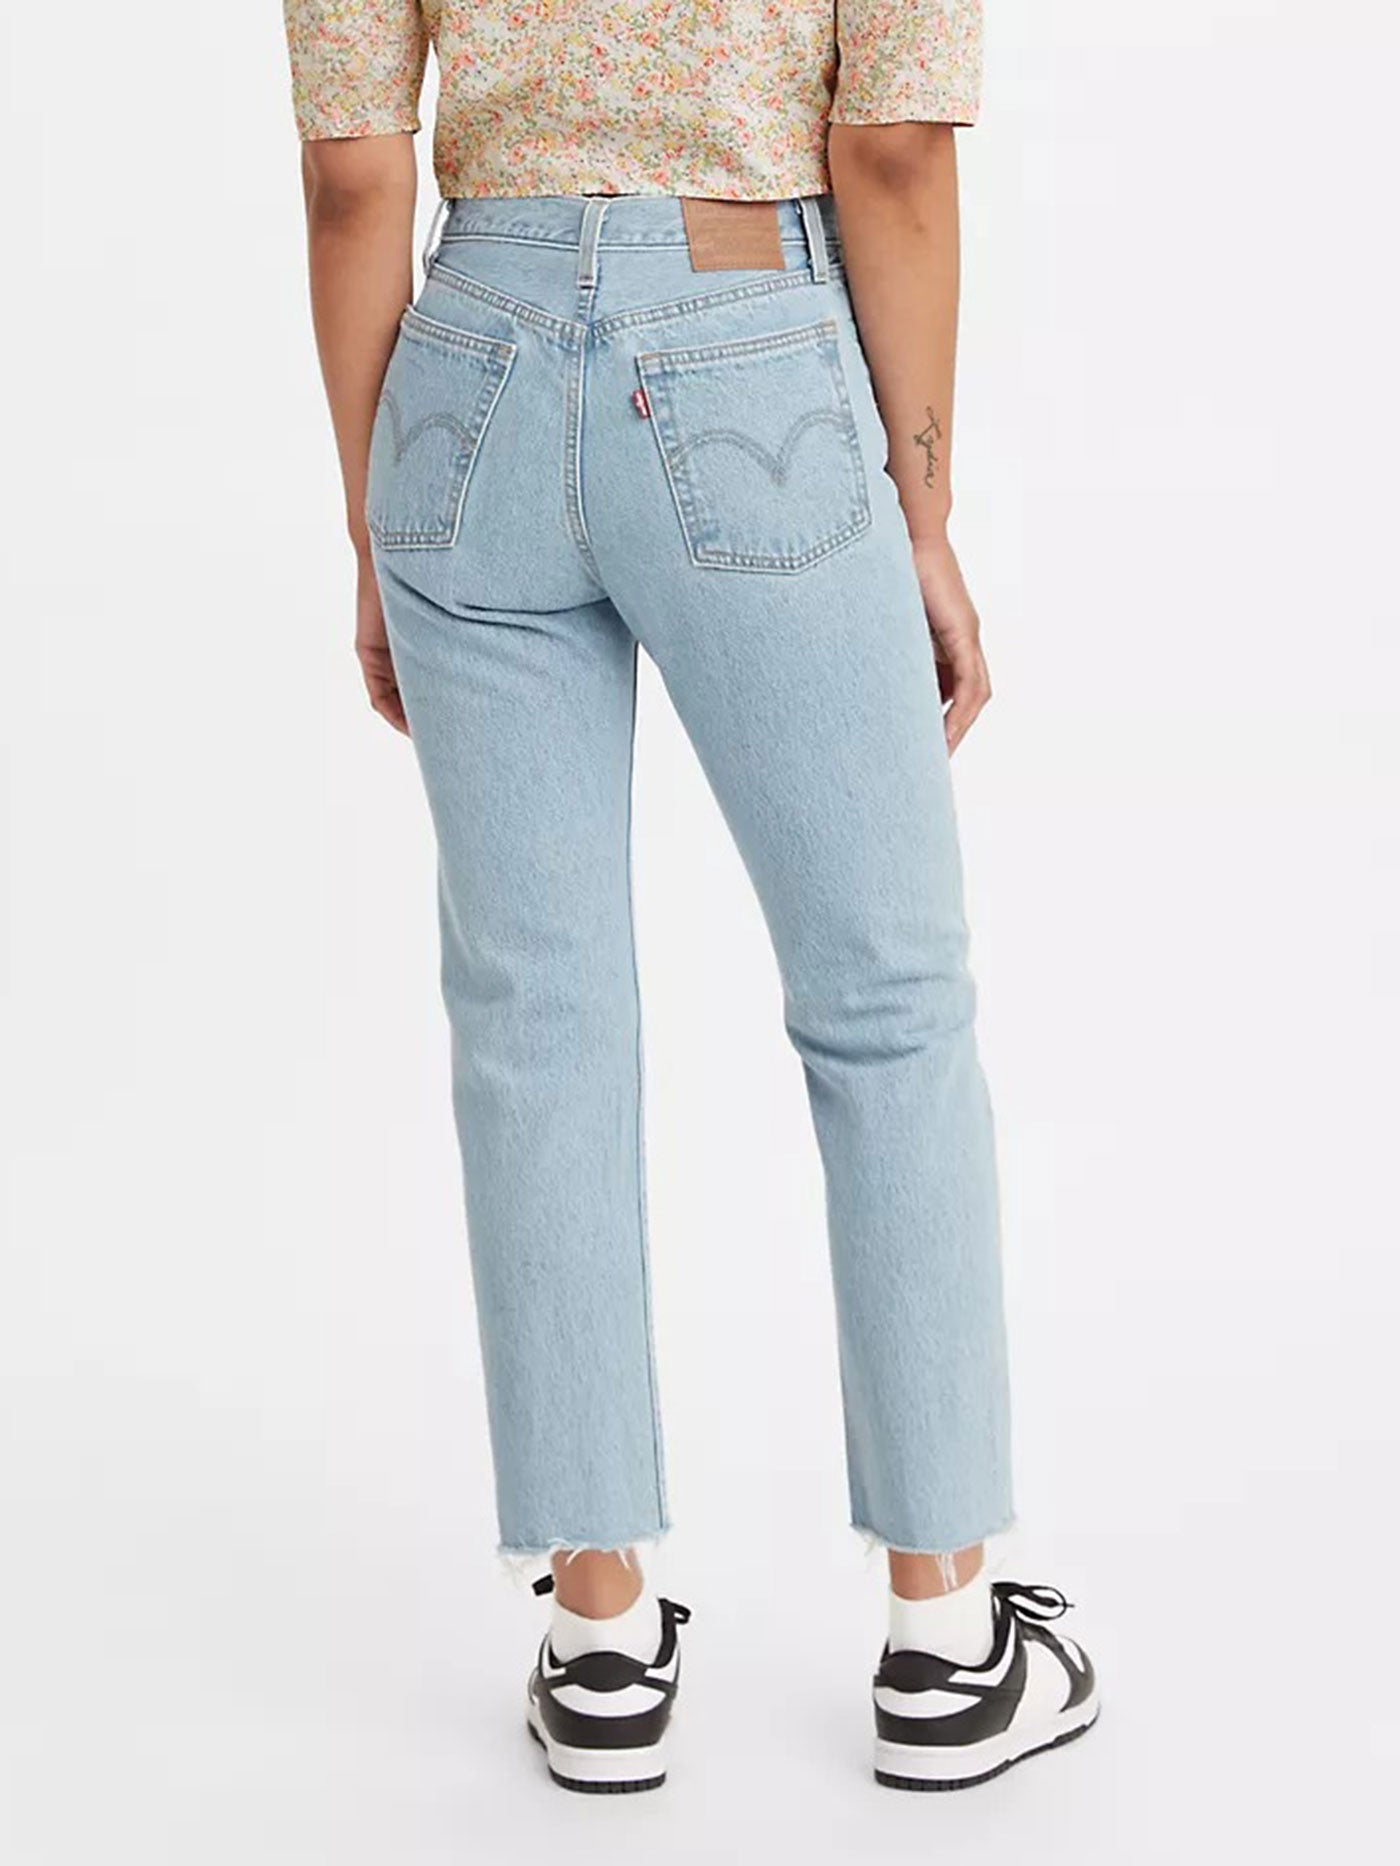 Levi's Women's Wedgie Straight Jeans, (New) White Stonewash, 24